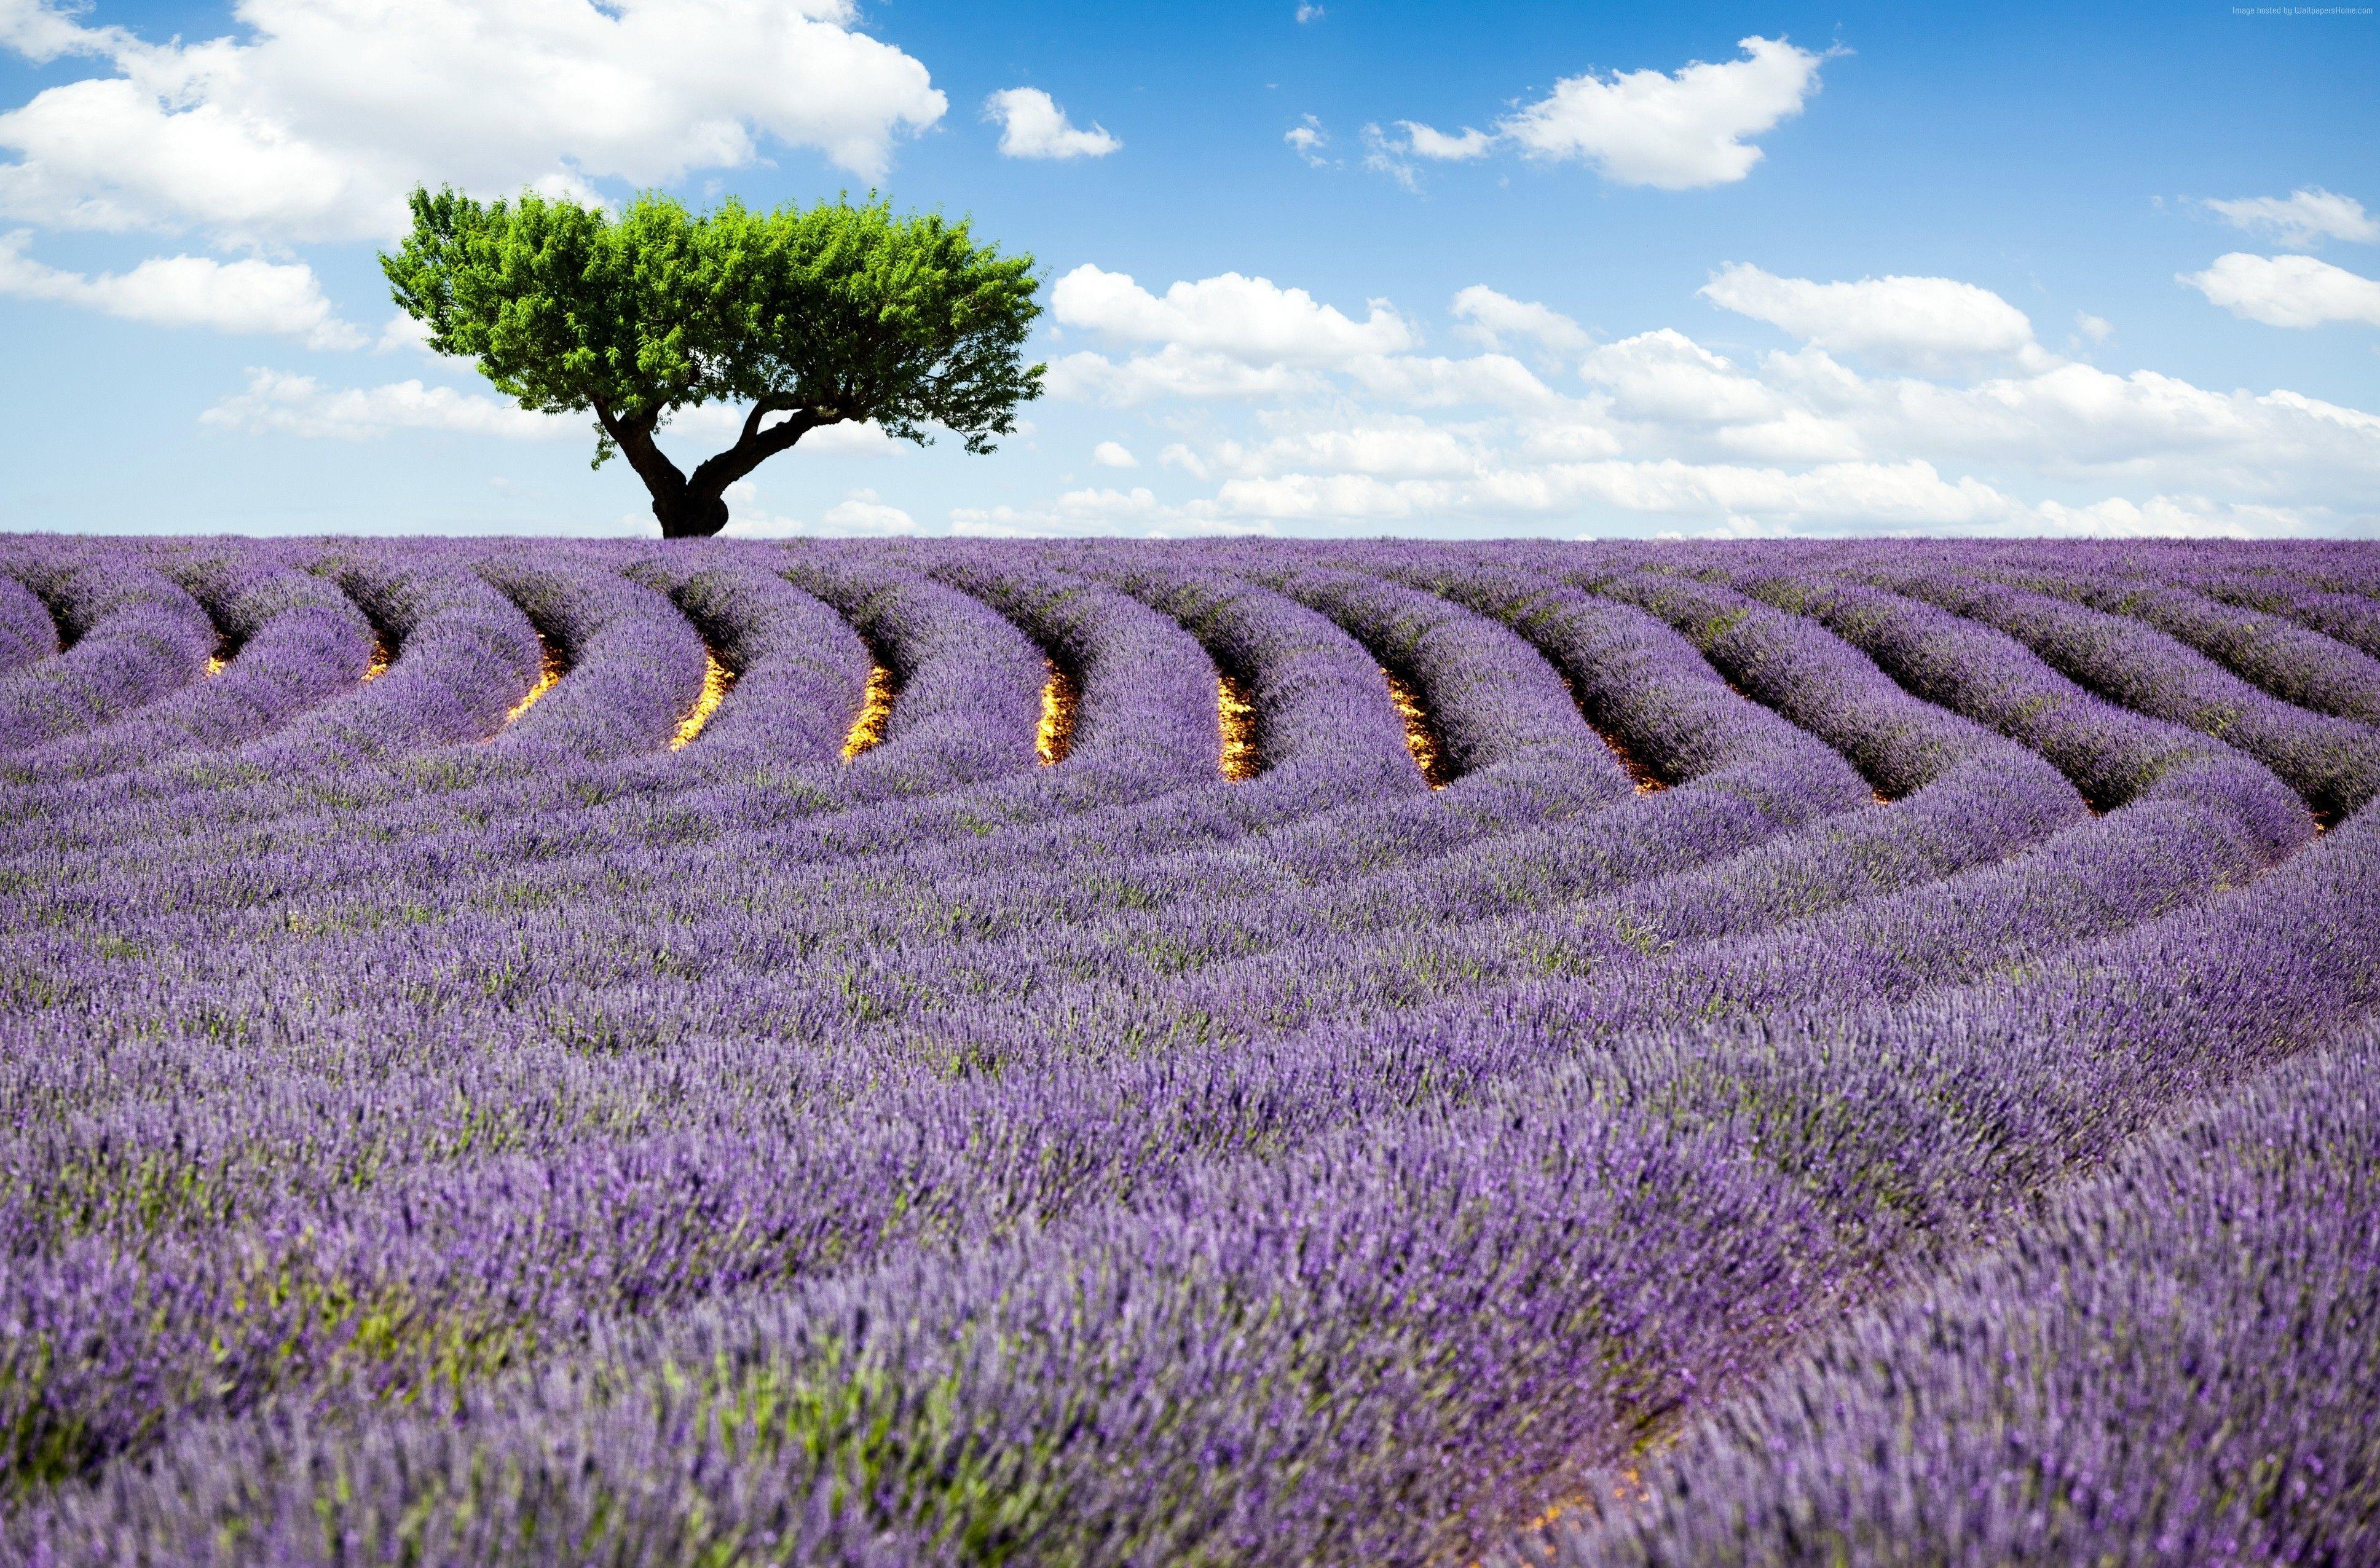 Best Lavender Field Pictures HD  Download Free Images on Unsplash